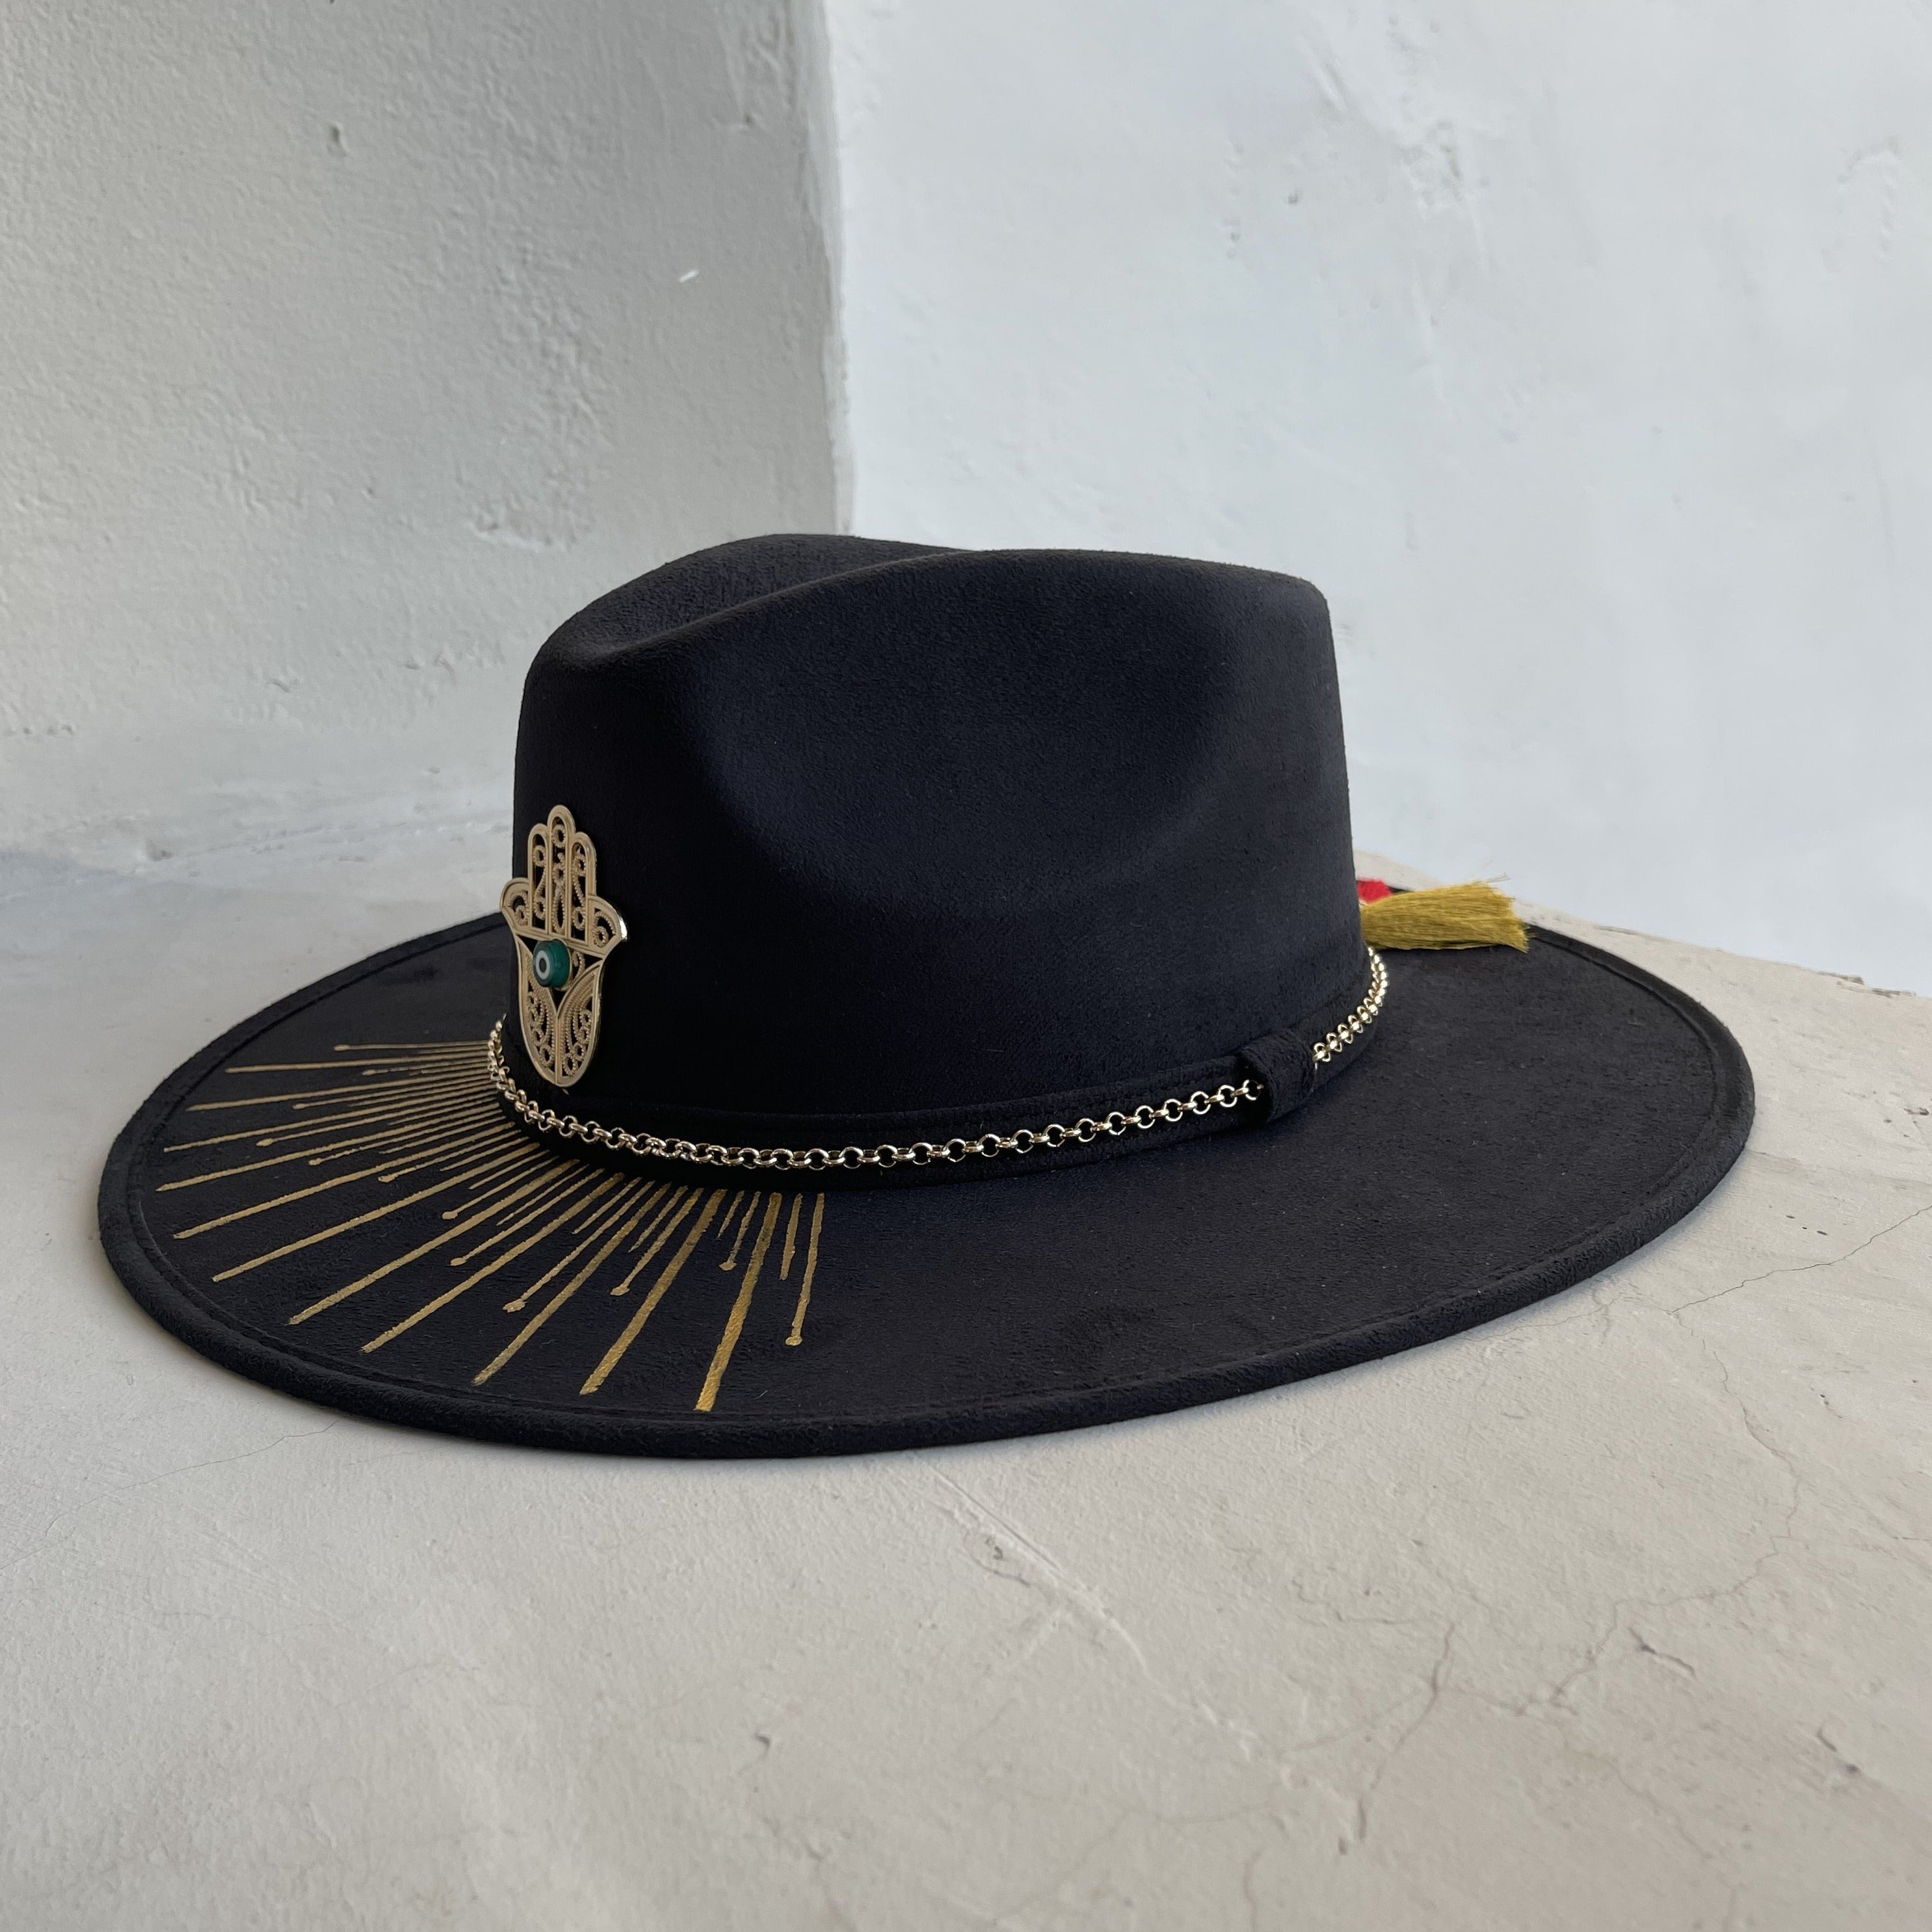 The Hamsa Suede Rancher Hat